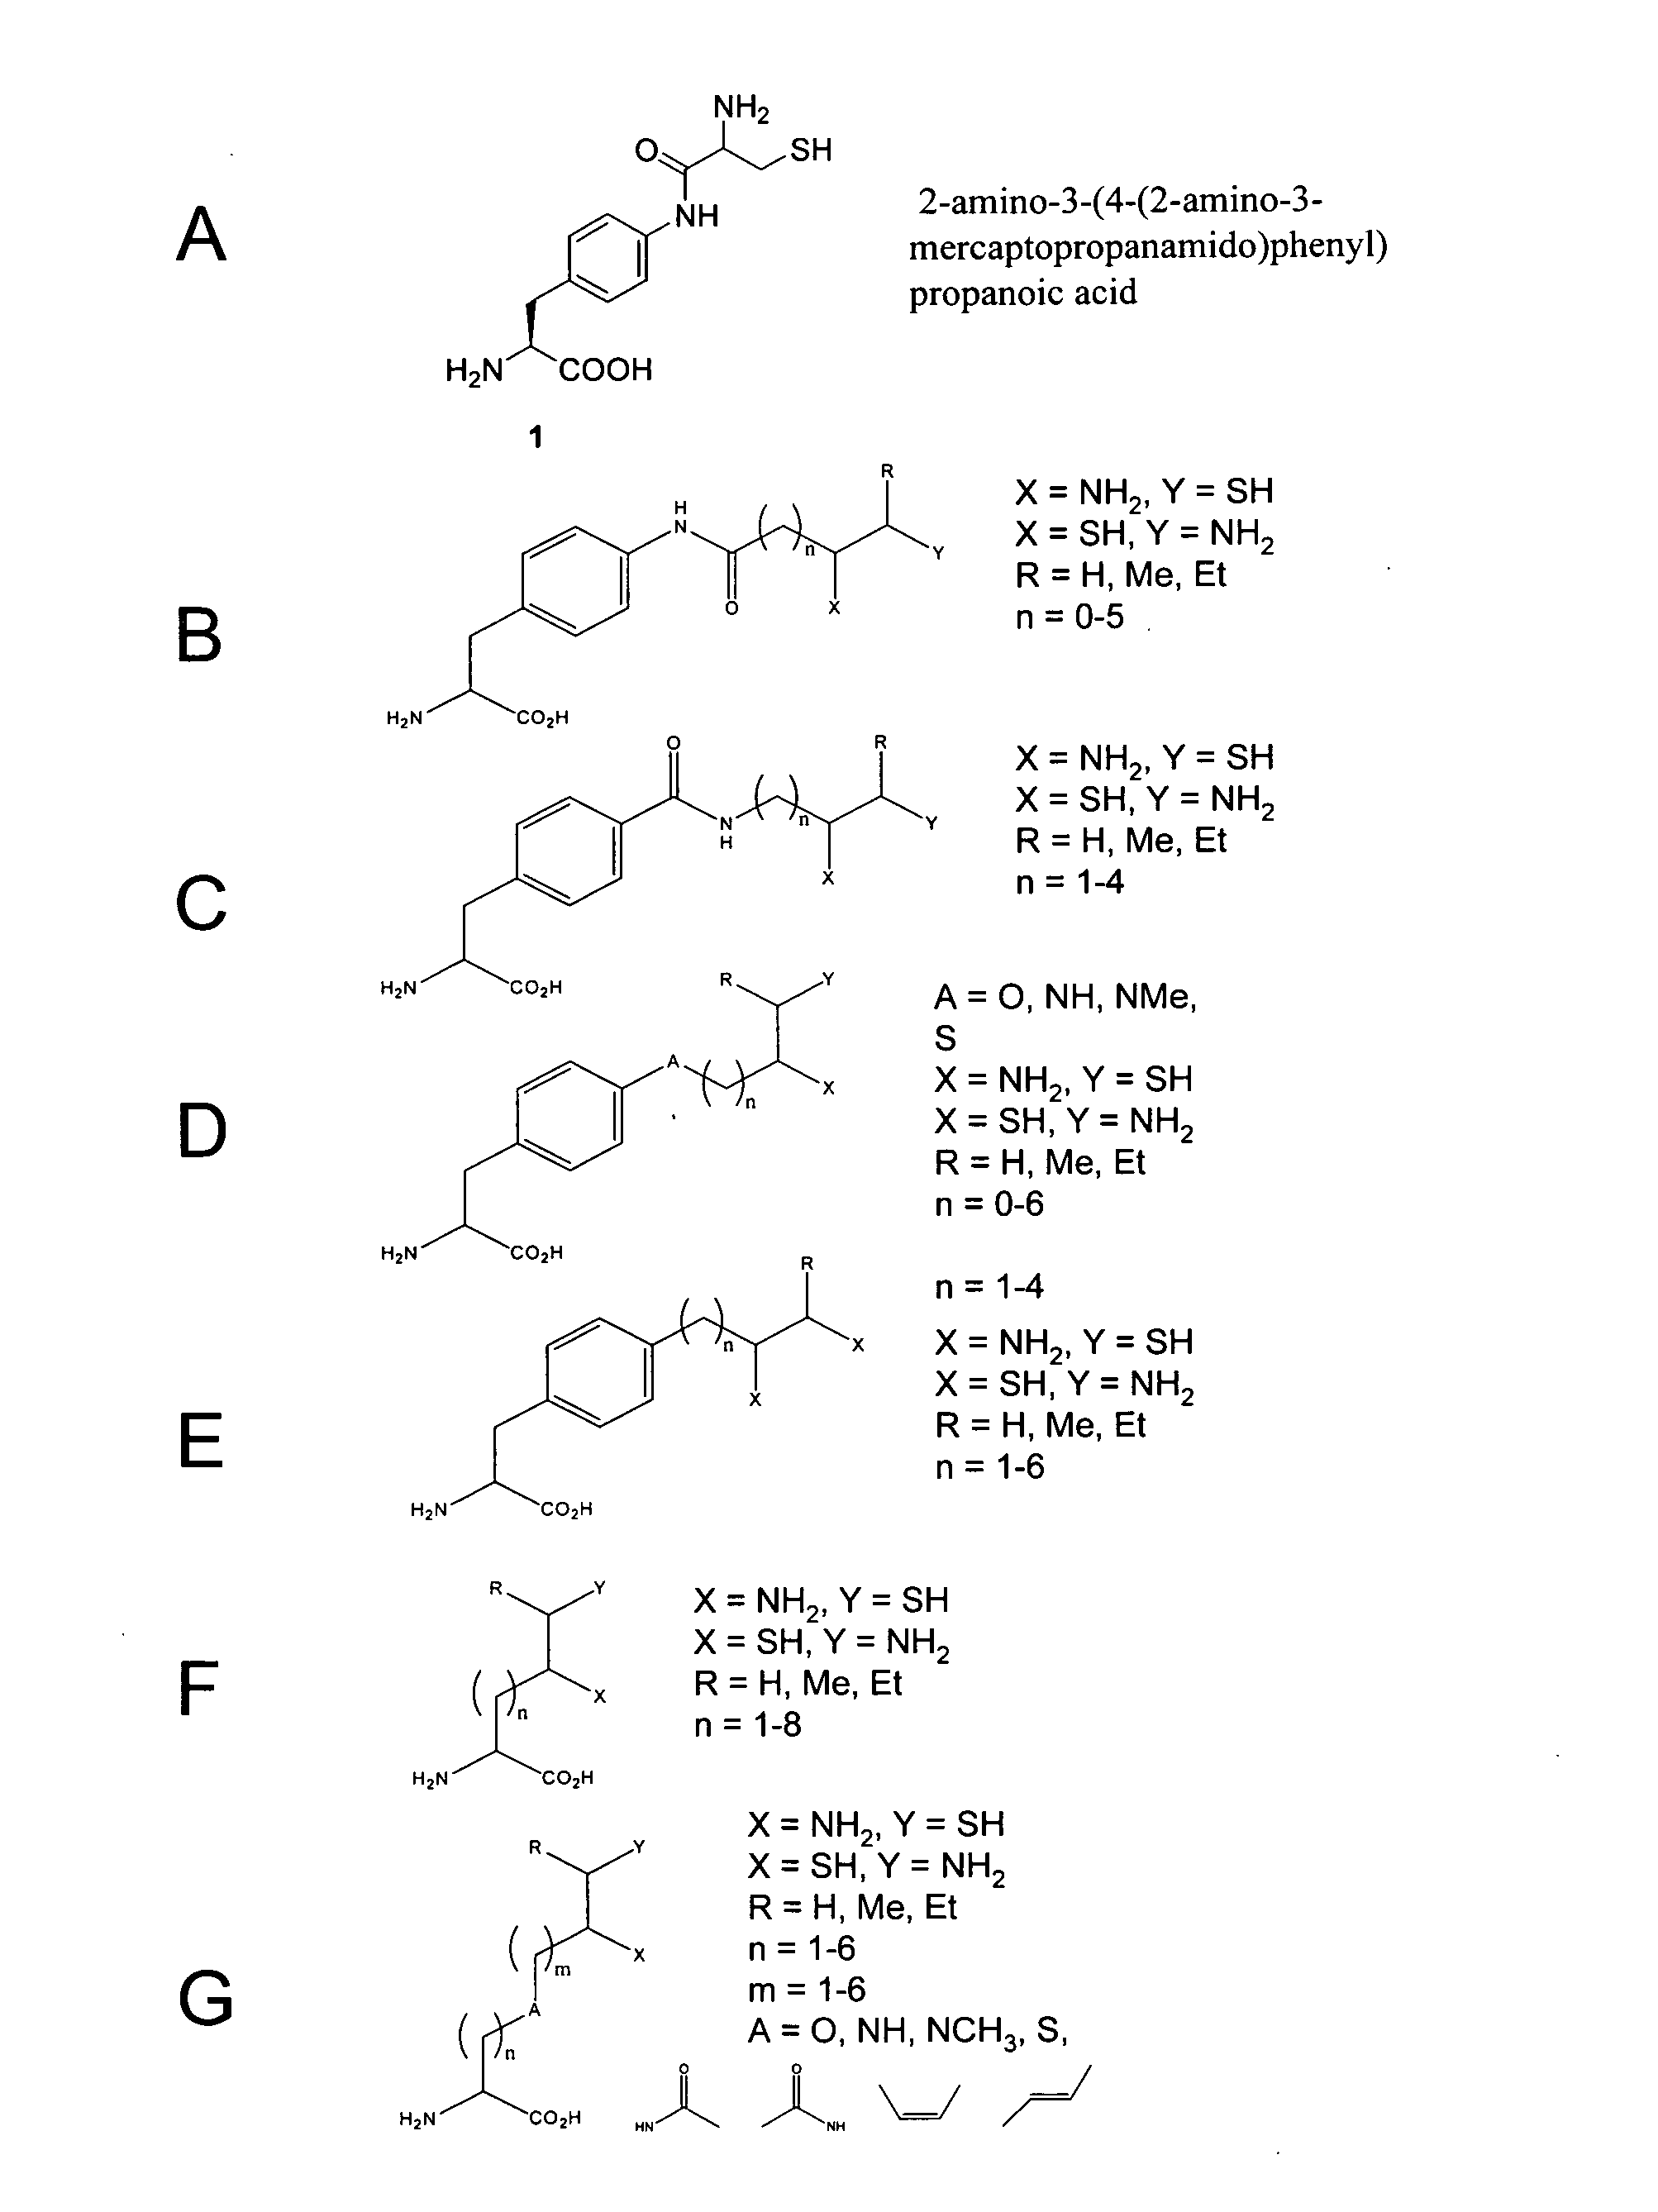 In vivo incorporation of an unnatural amino acid comprising a 1,2-aminothiol group